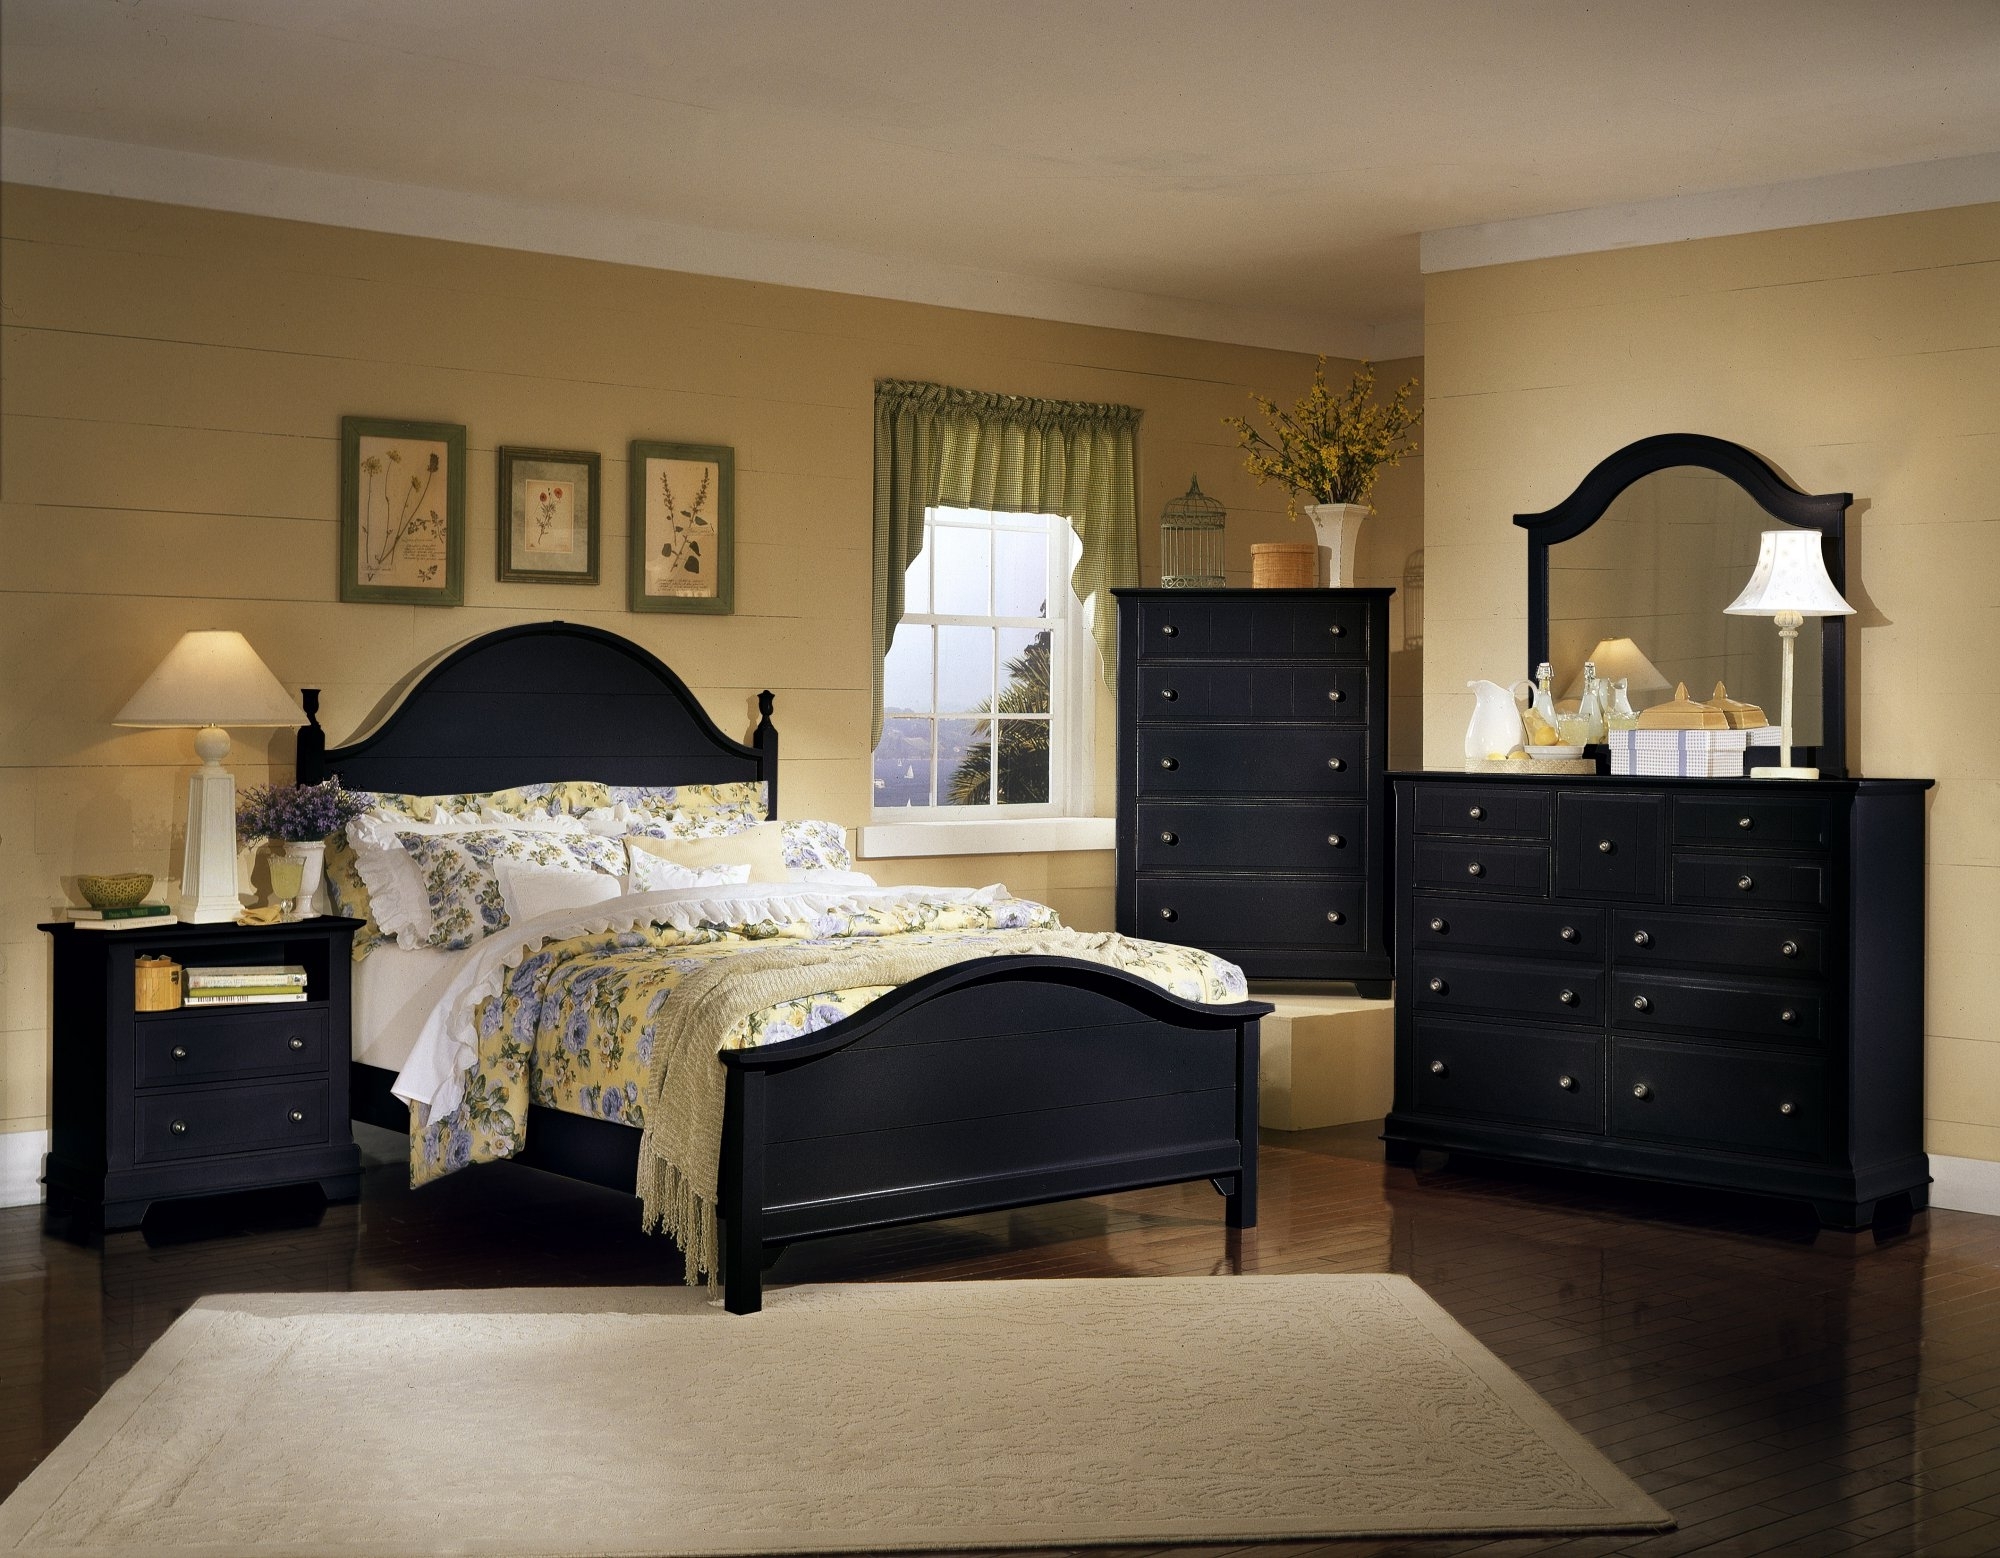 black bedroom furniture design ideas photo - 8